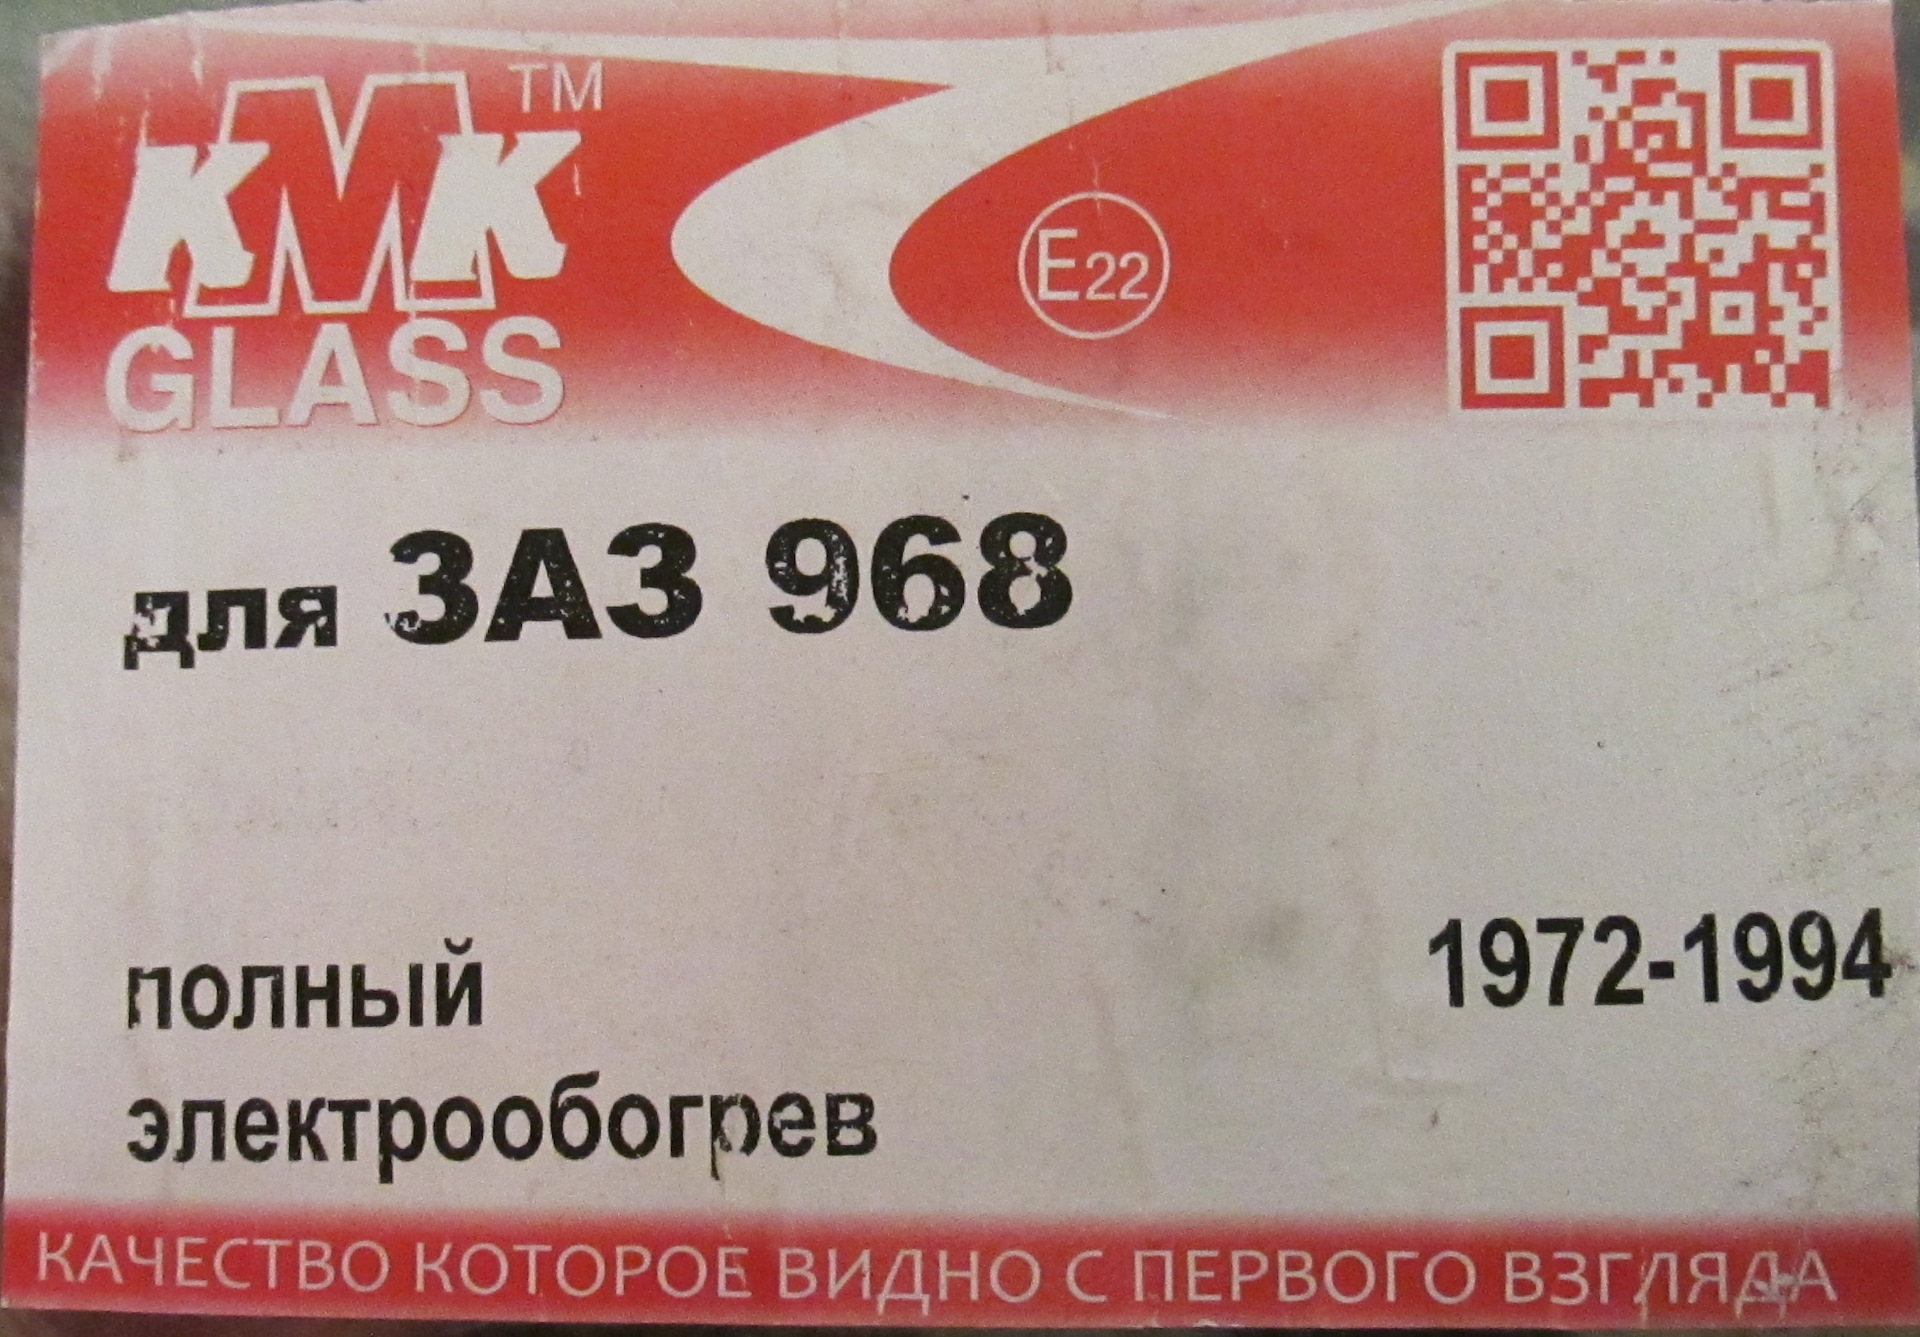 Стекло кмк производитель. Производители стекла KMK. КМК Glass. KMK Glass Россия. KMK Glass 3014bclh.